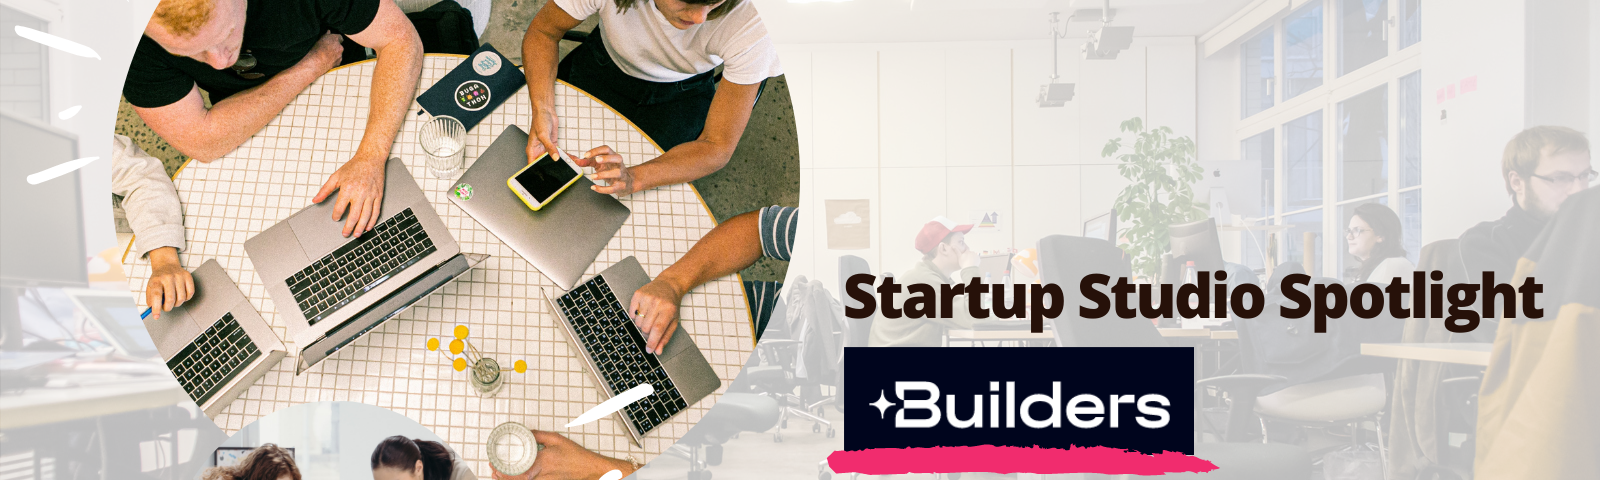 Startup Studio Spotlight: Builders, By Startup Studio Insider